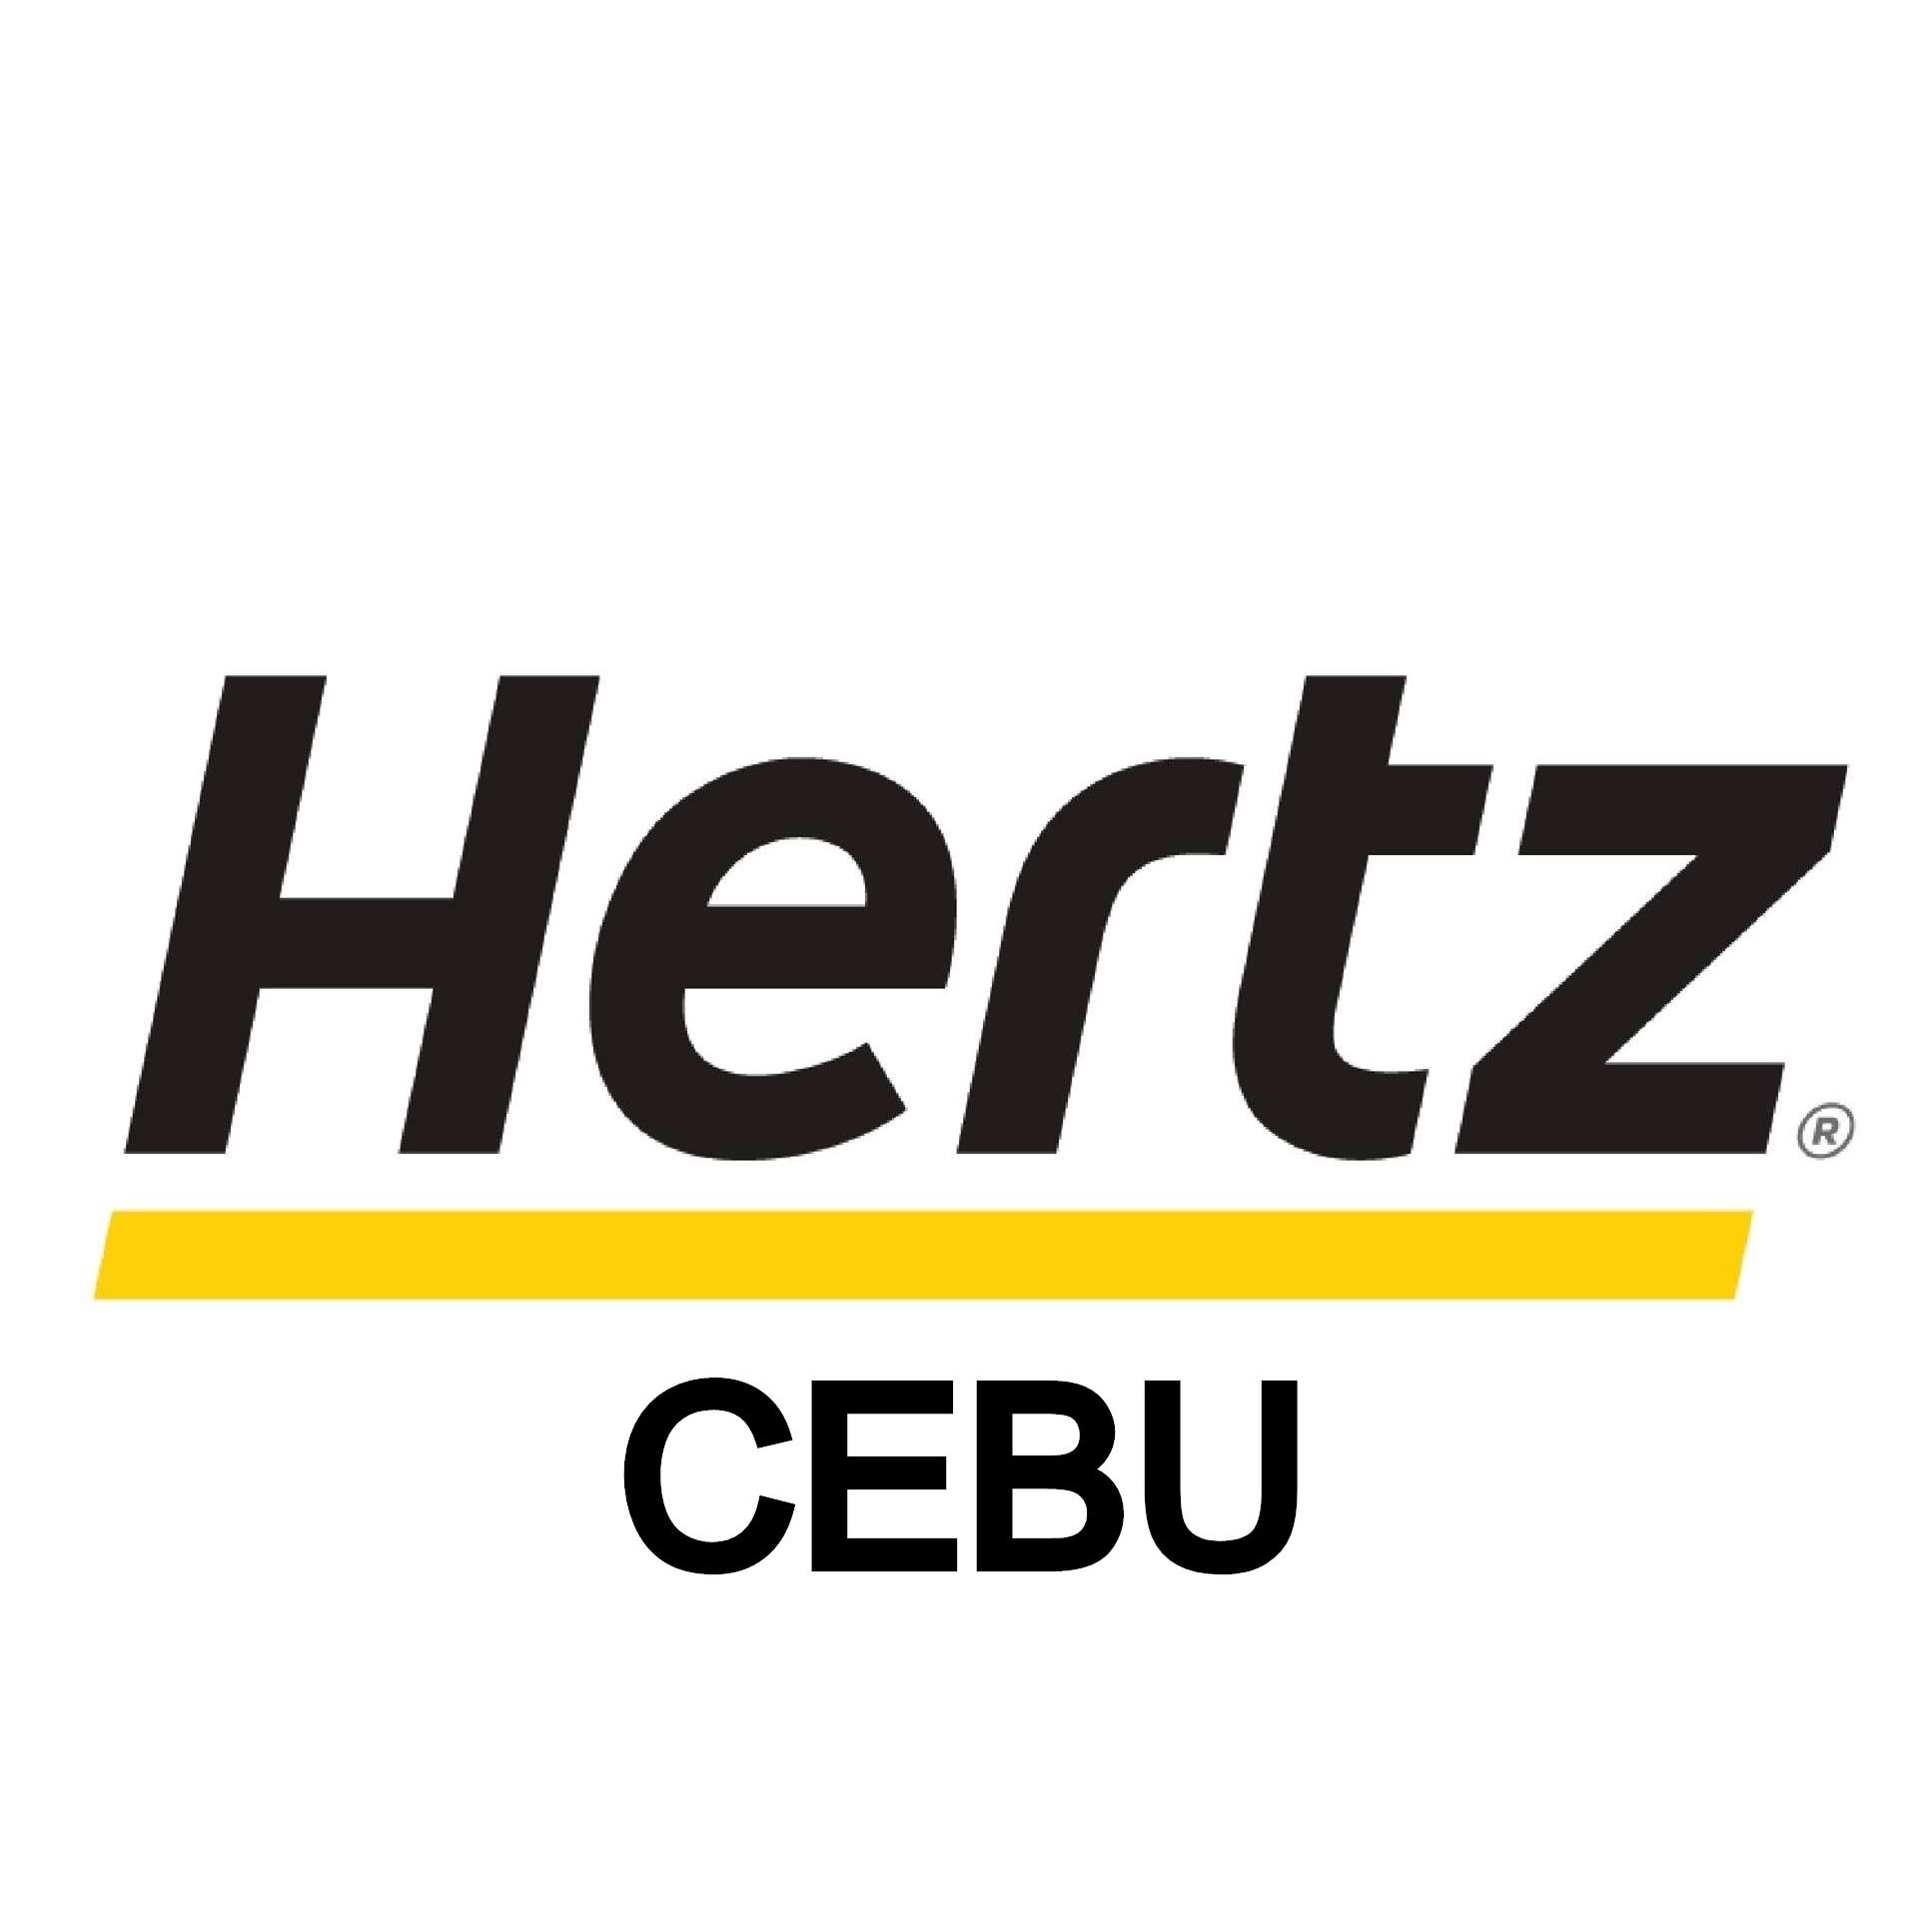 Hertz Cebu.jpg